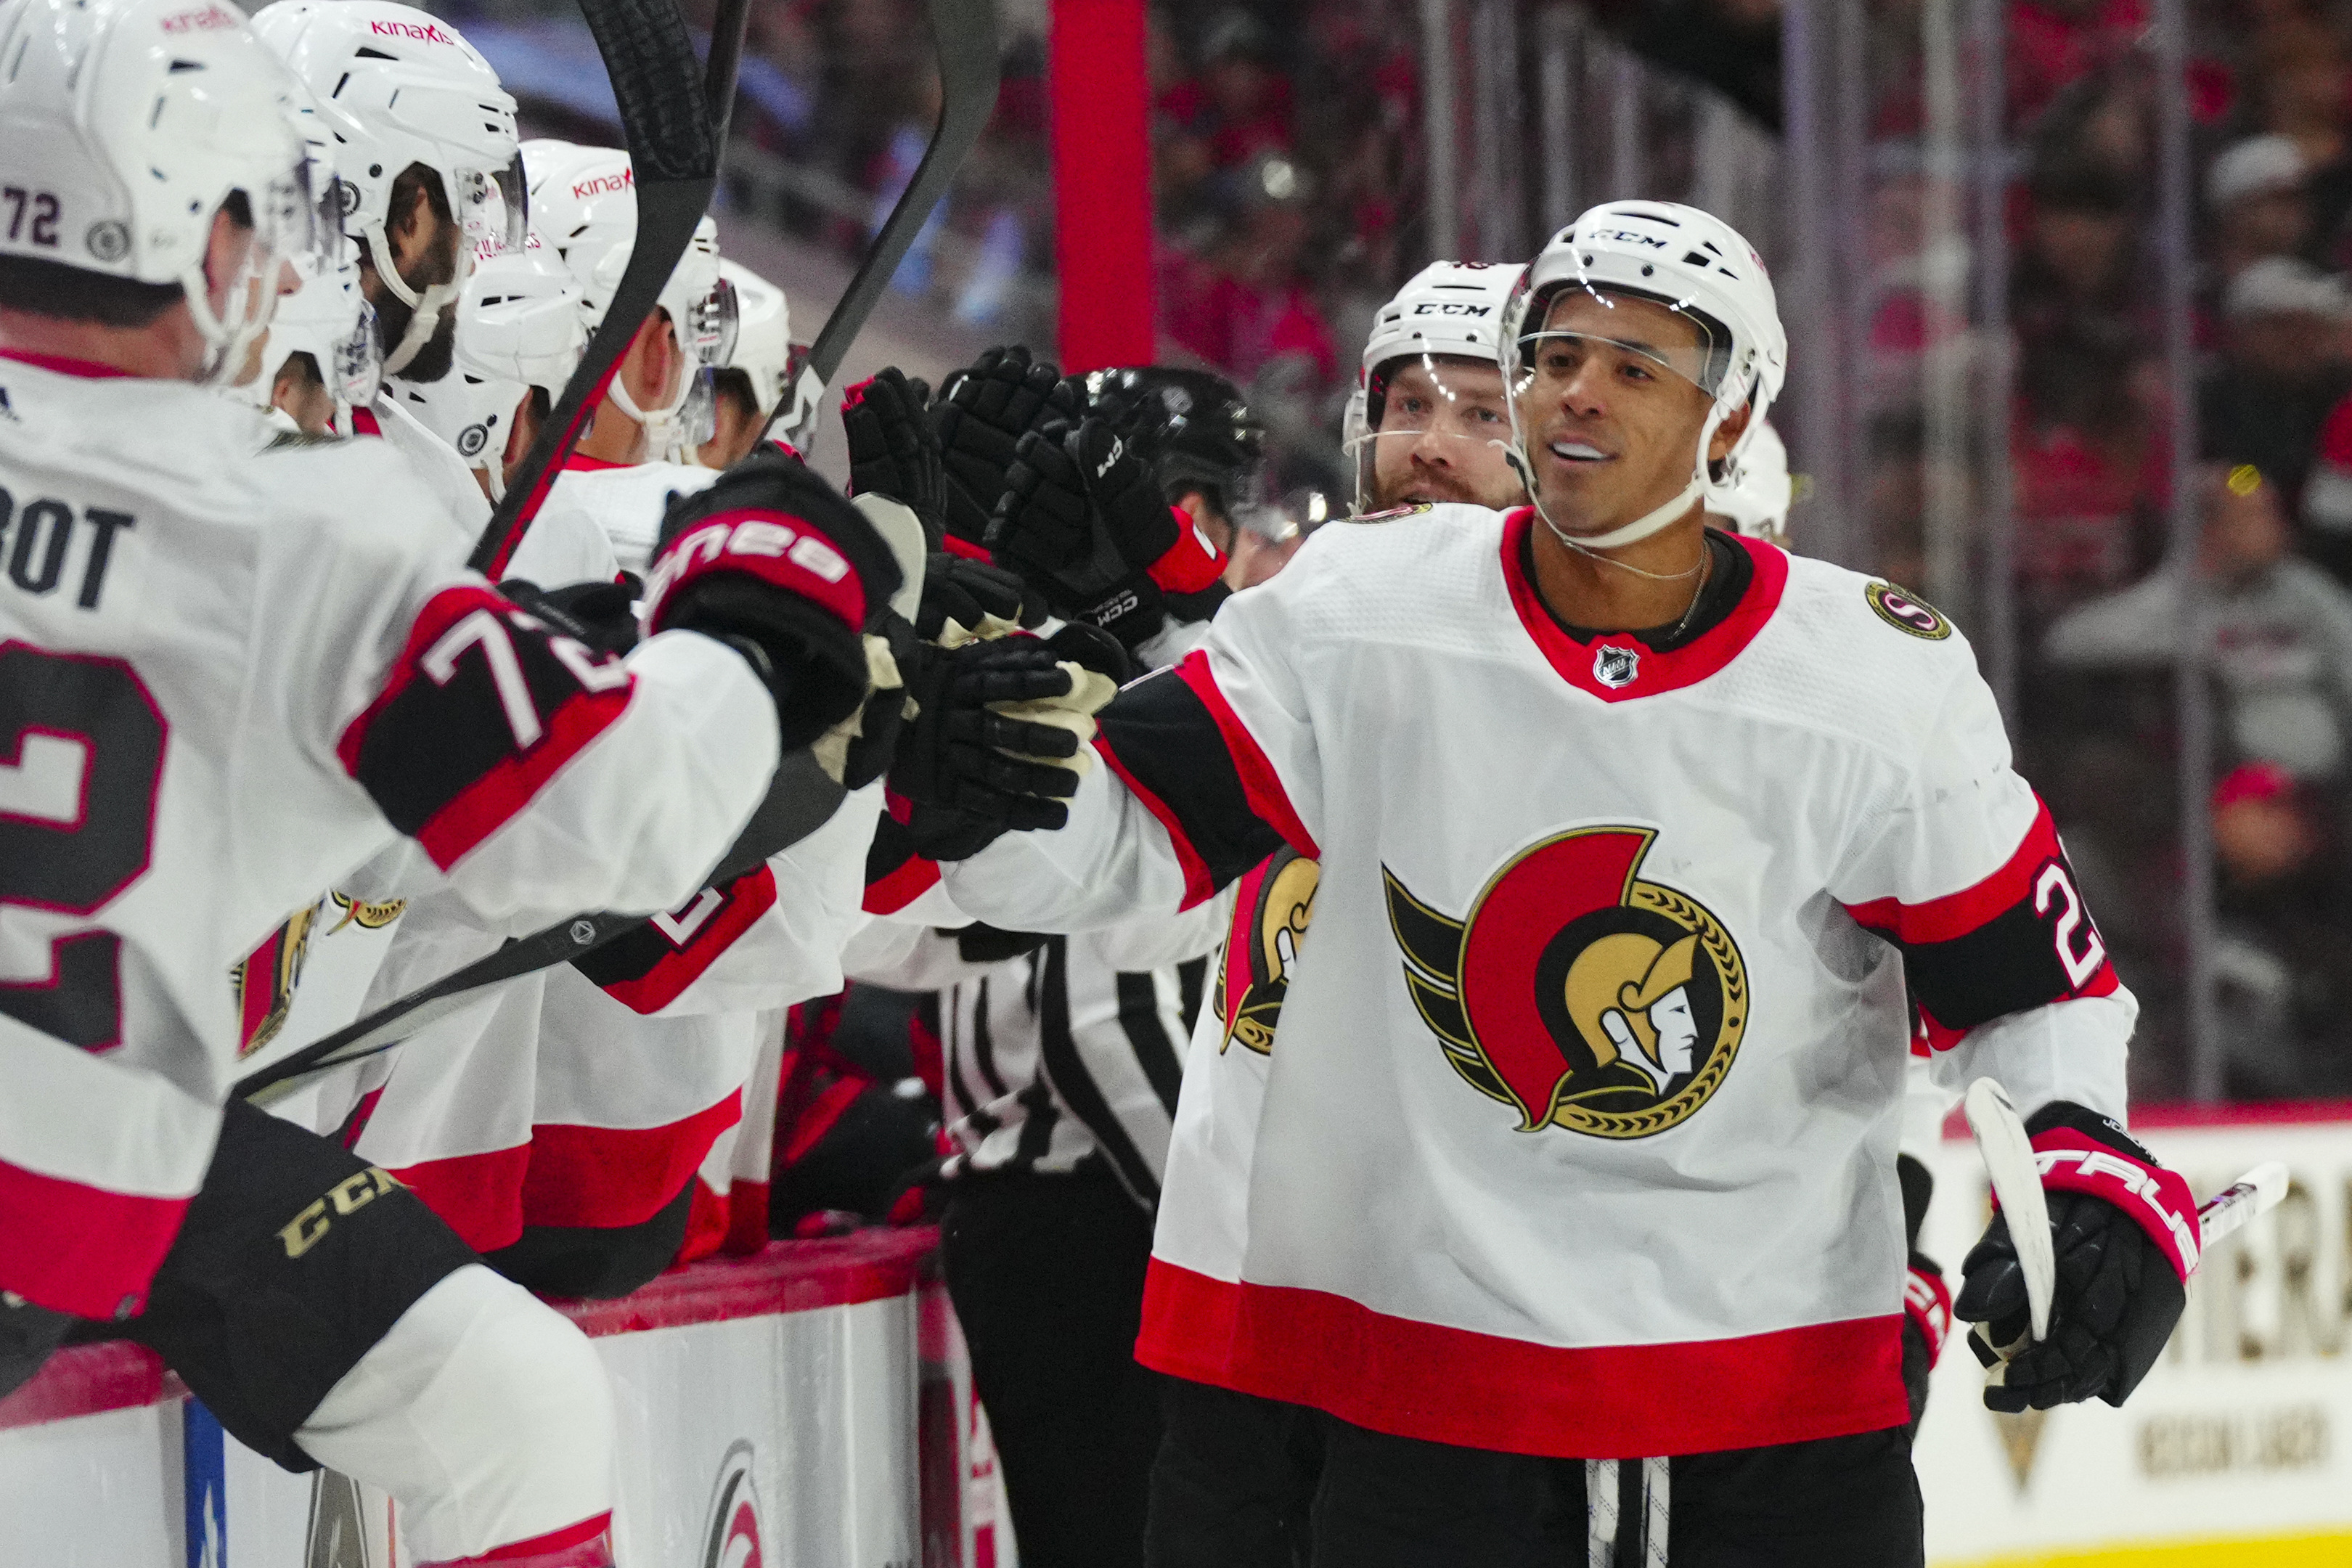 The NHL's Ottawa Senators Are Going Up For Sale